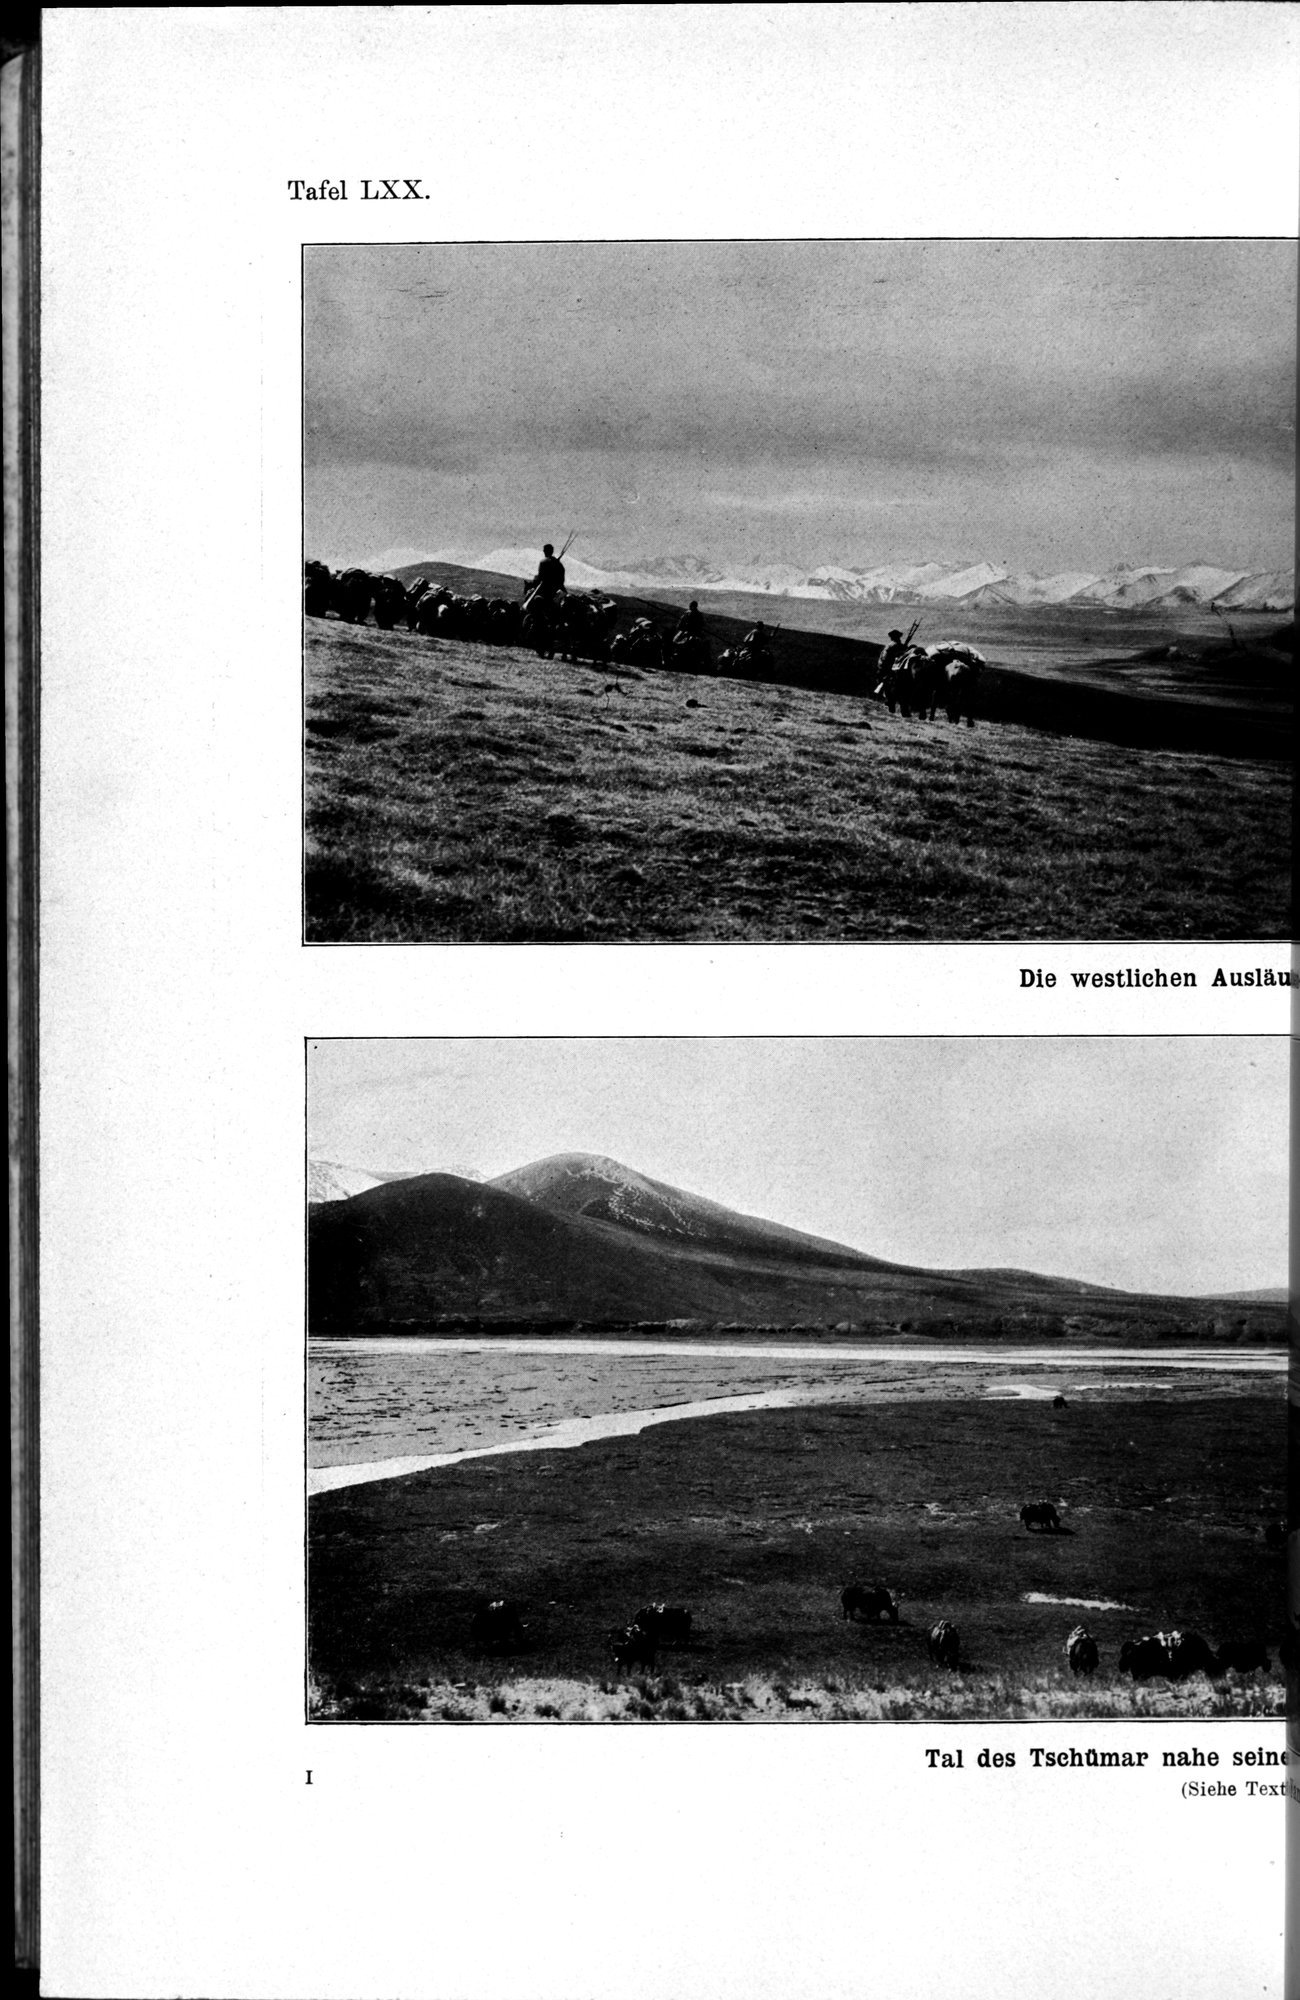 Meine Tibetreise : vol.1 / Page 388 (Grayscale High Resolution Image)